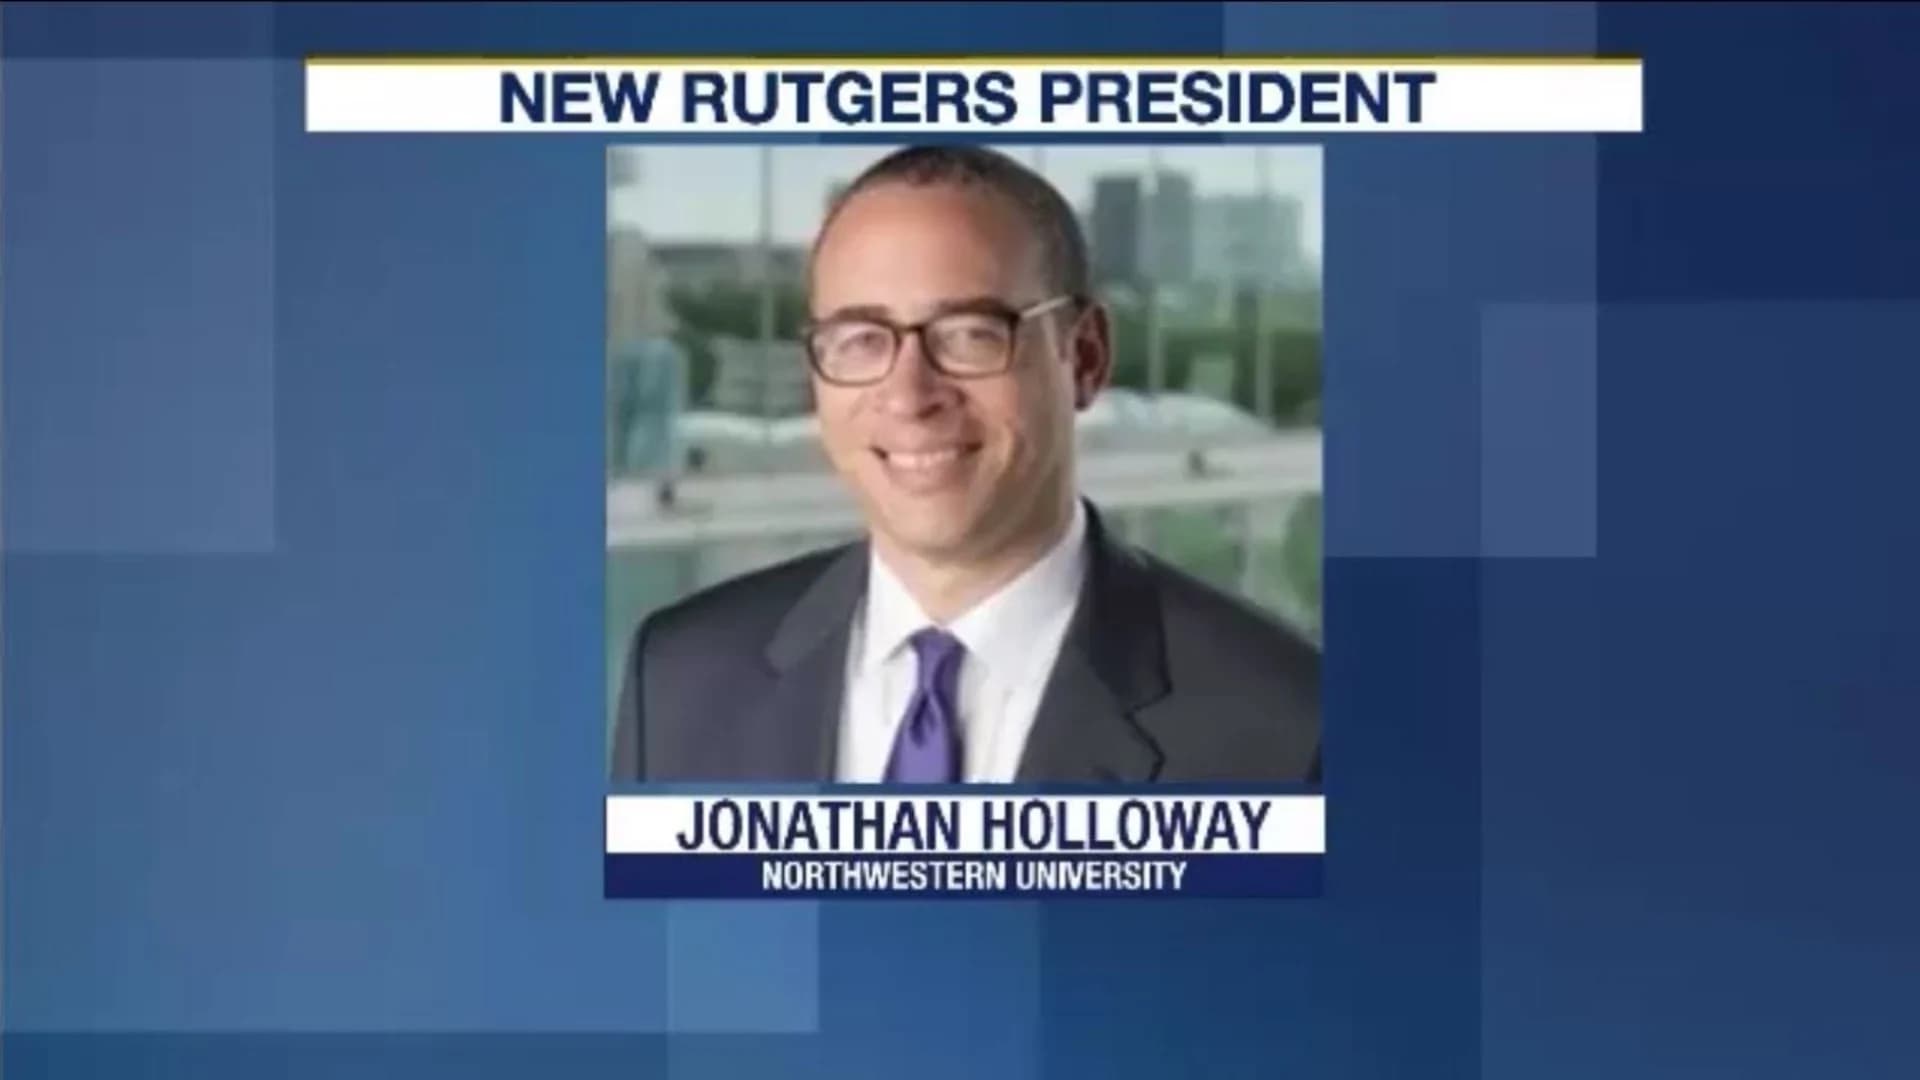 New Rutgers University President Jonathan Holloway gives himself a 10% pay cut